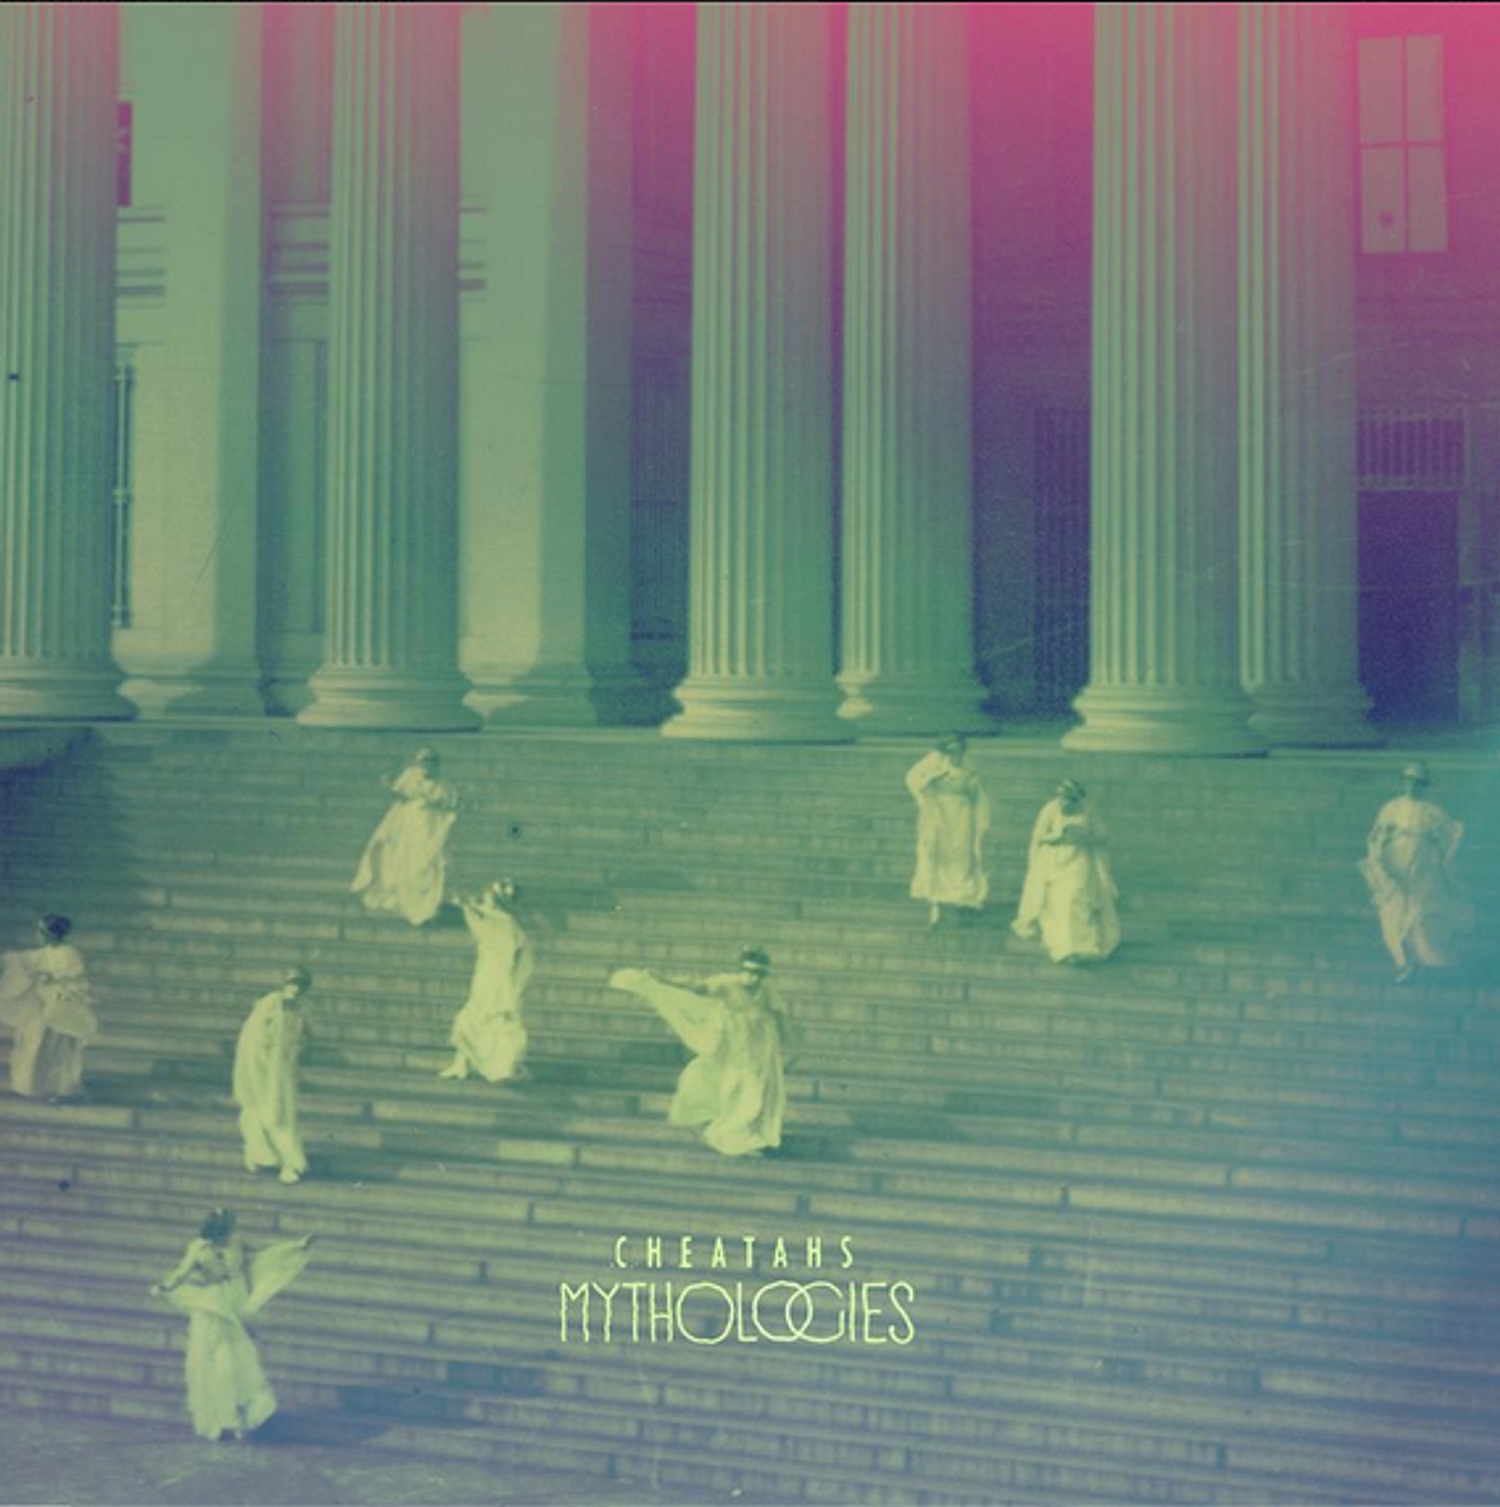 Cheatahs announce ‘Mythologies’ album, share ‘Seven Sisters’